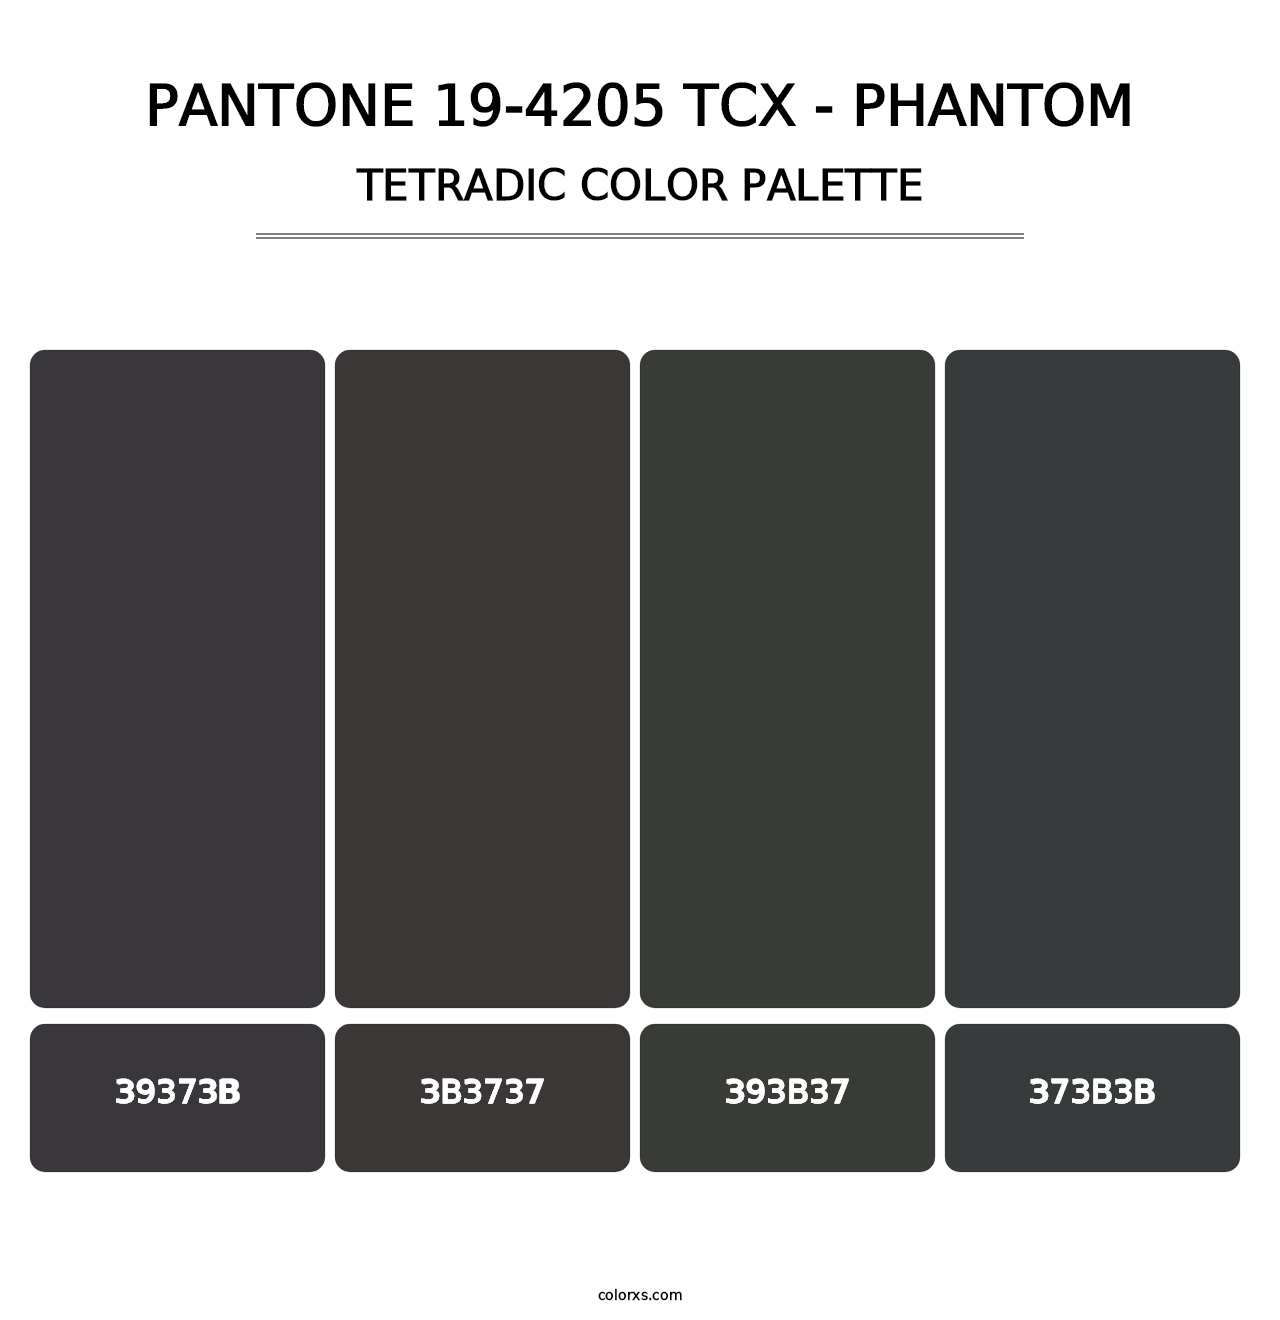 PANTONE 19-4205 TCX - Phantom - Tetradic Color Palette